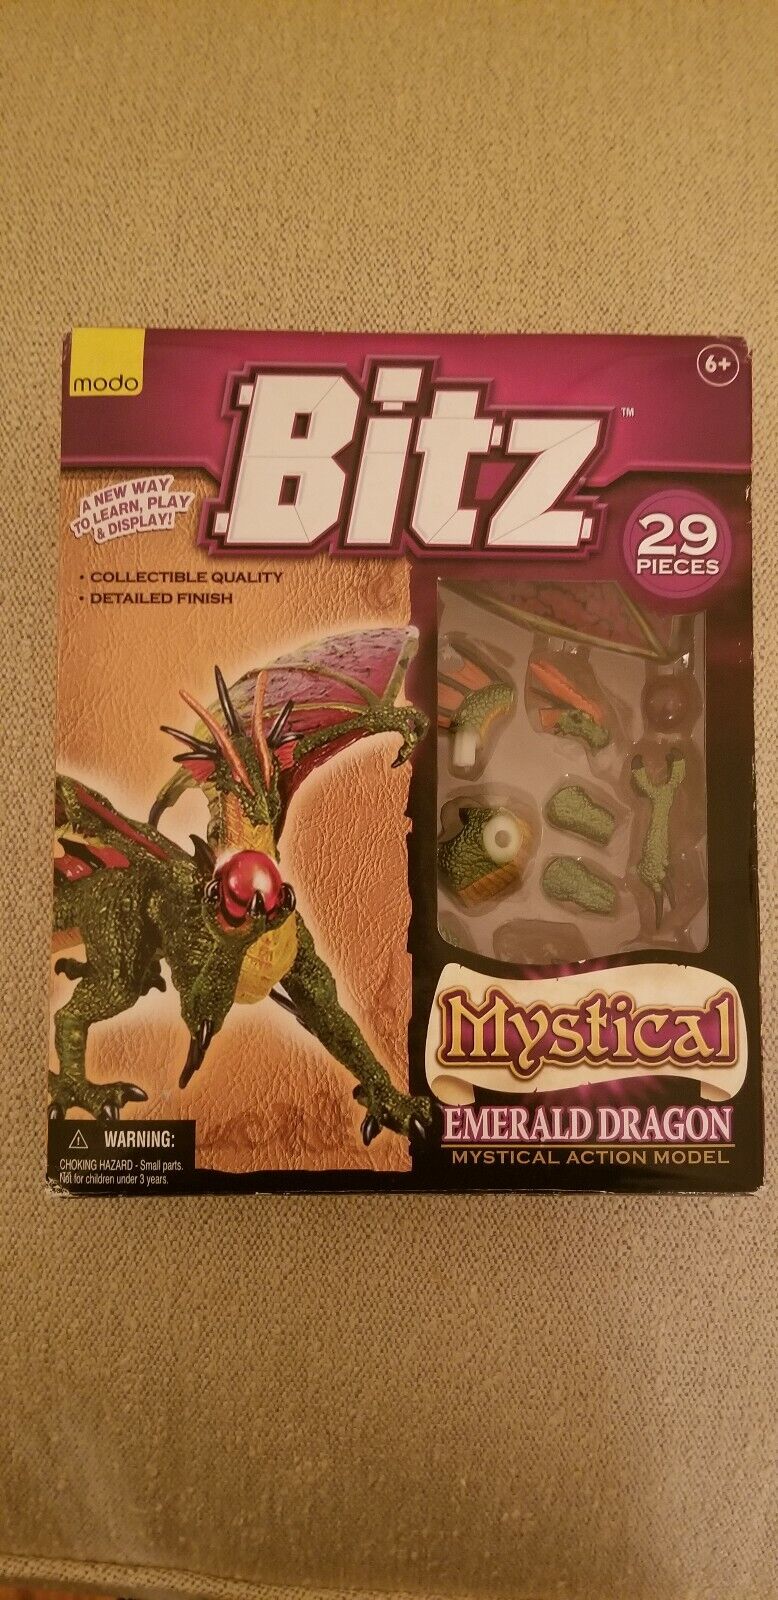 Modo Bitz Mystical Emerald Dragon Action Model 29 pieces 